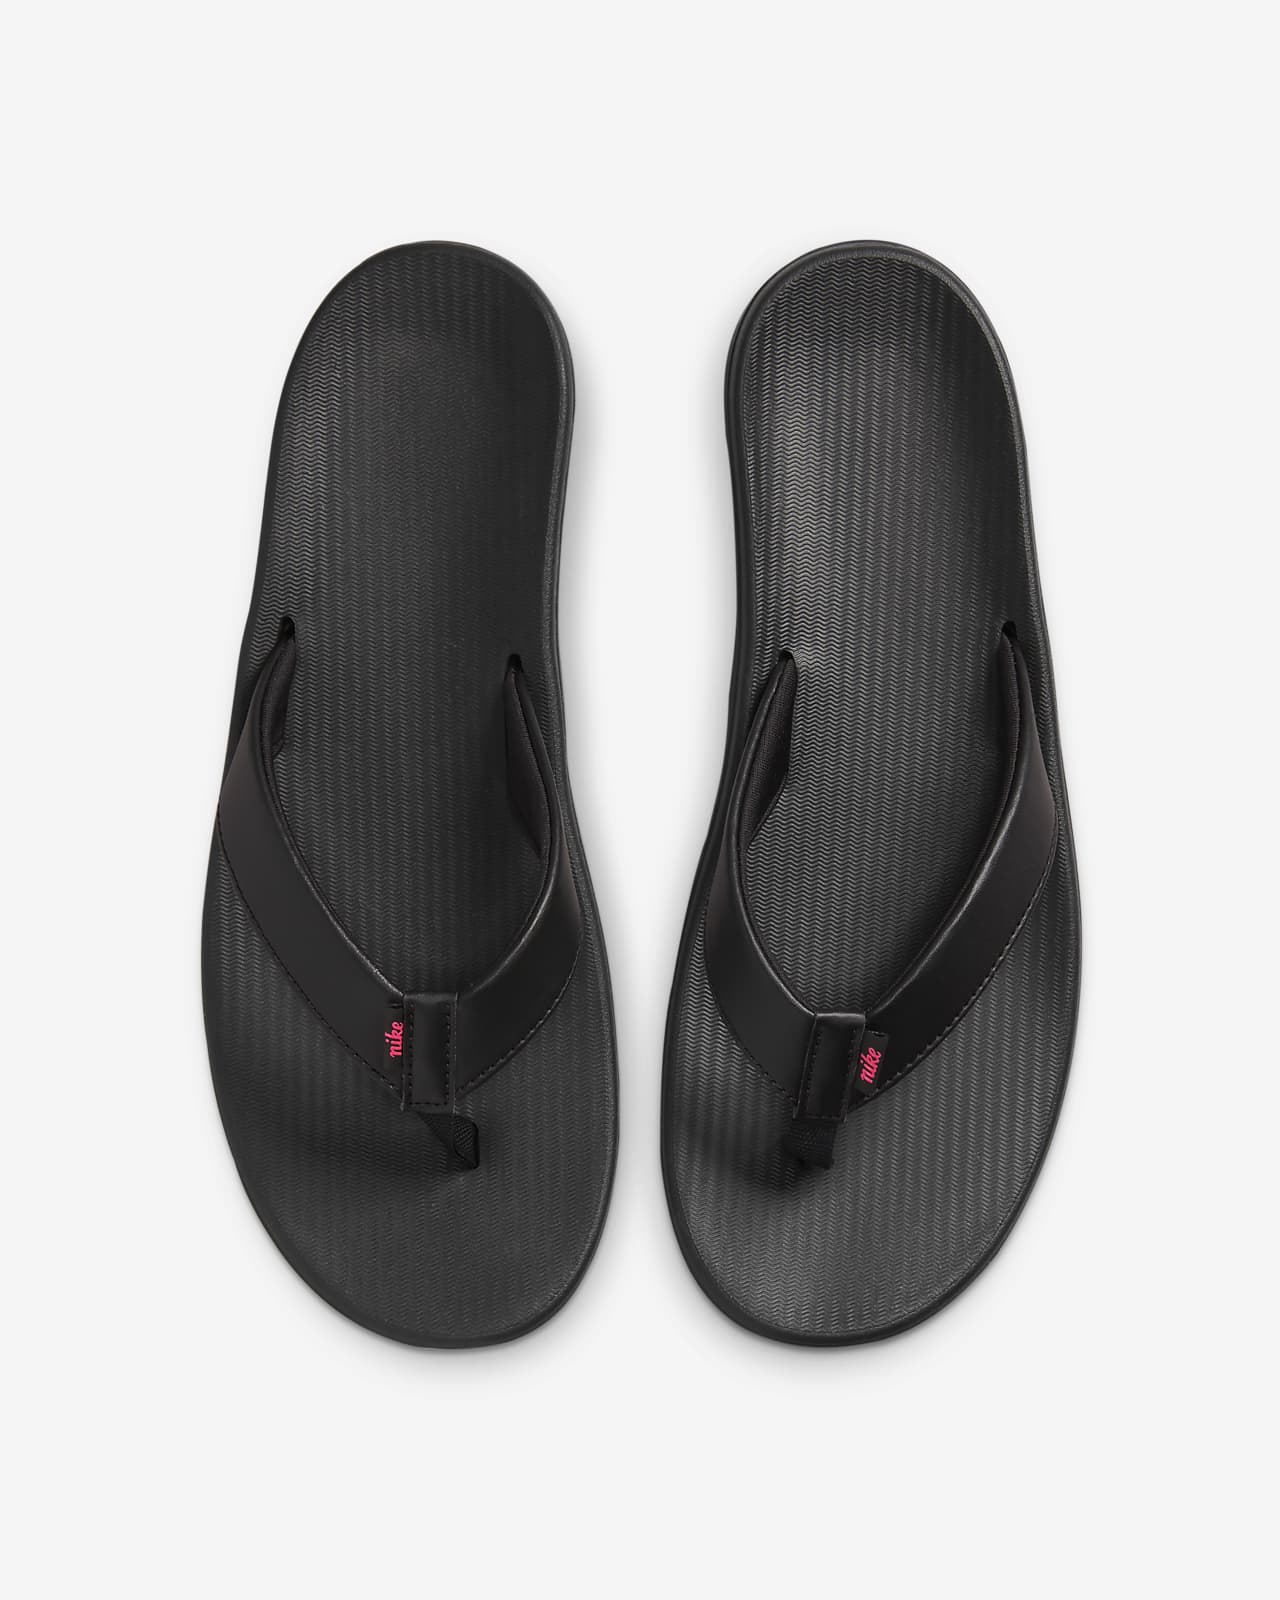 nike bella kai women's flip flop sandals